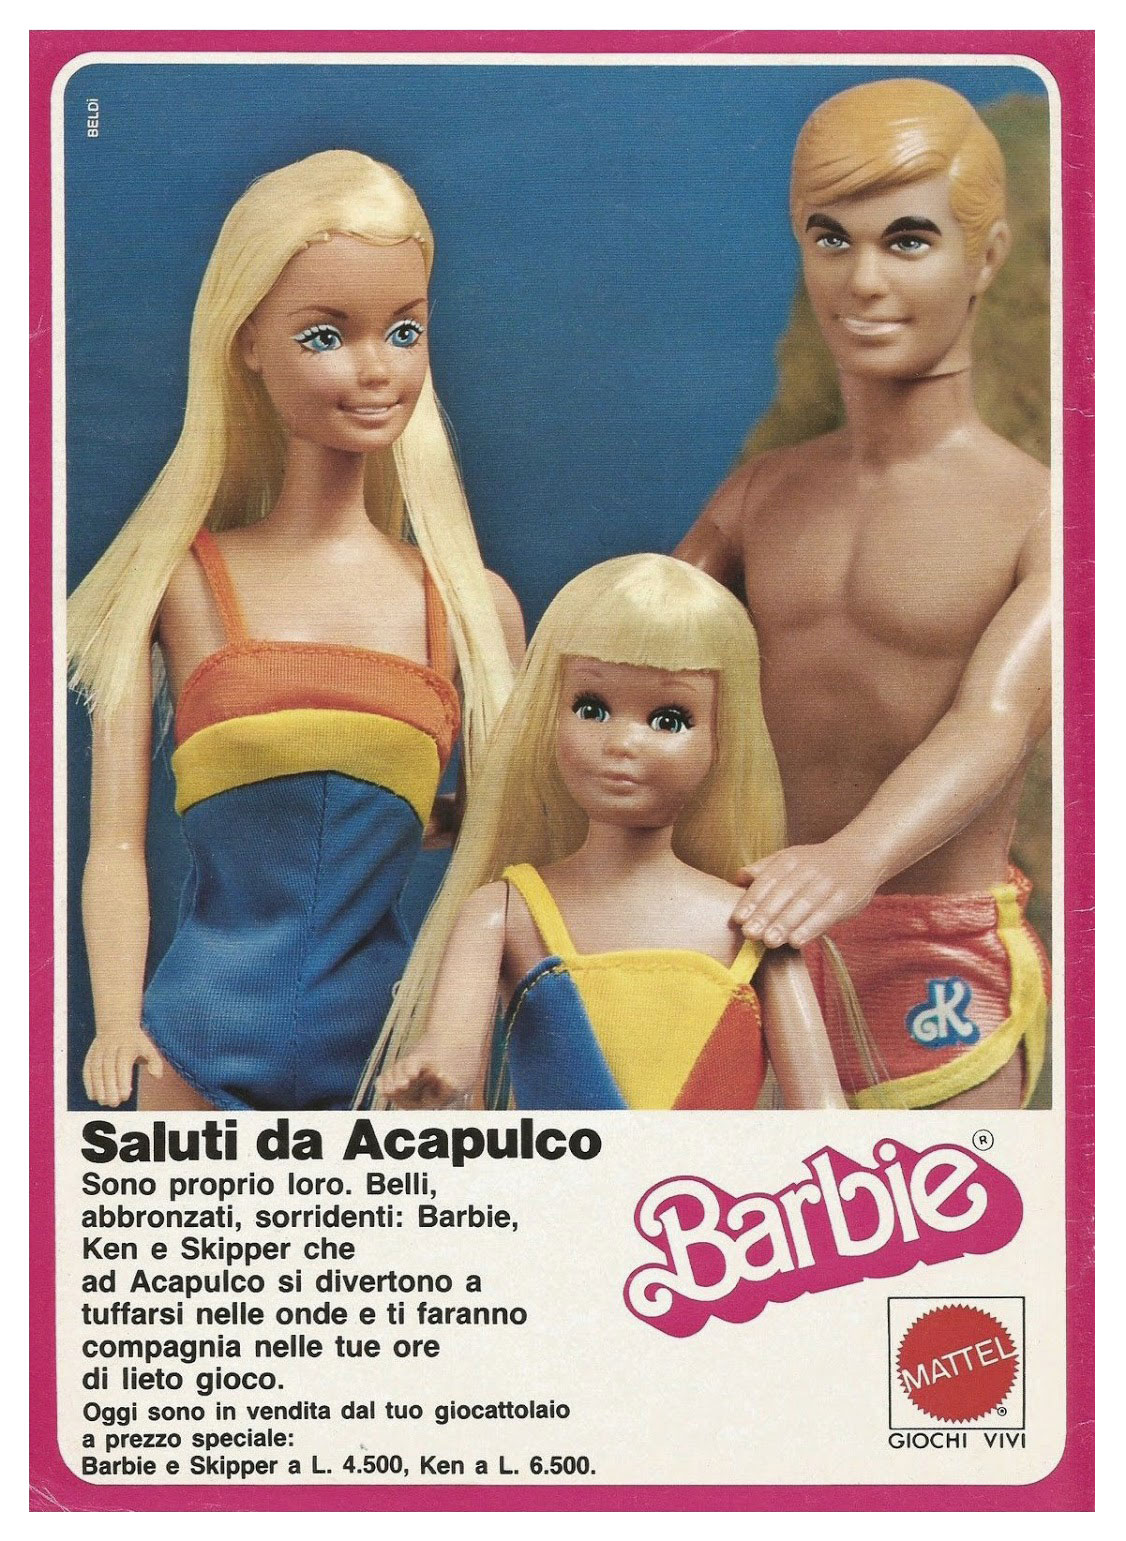 1979 Italian Ken Acapulco advertisement